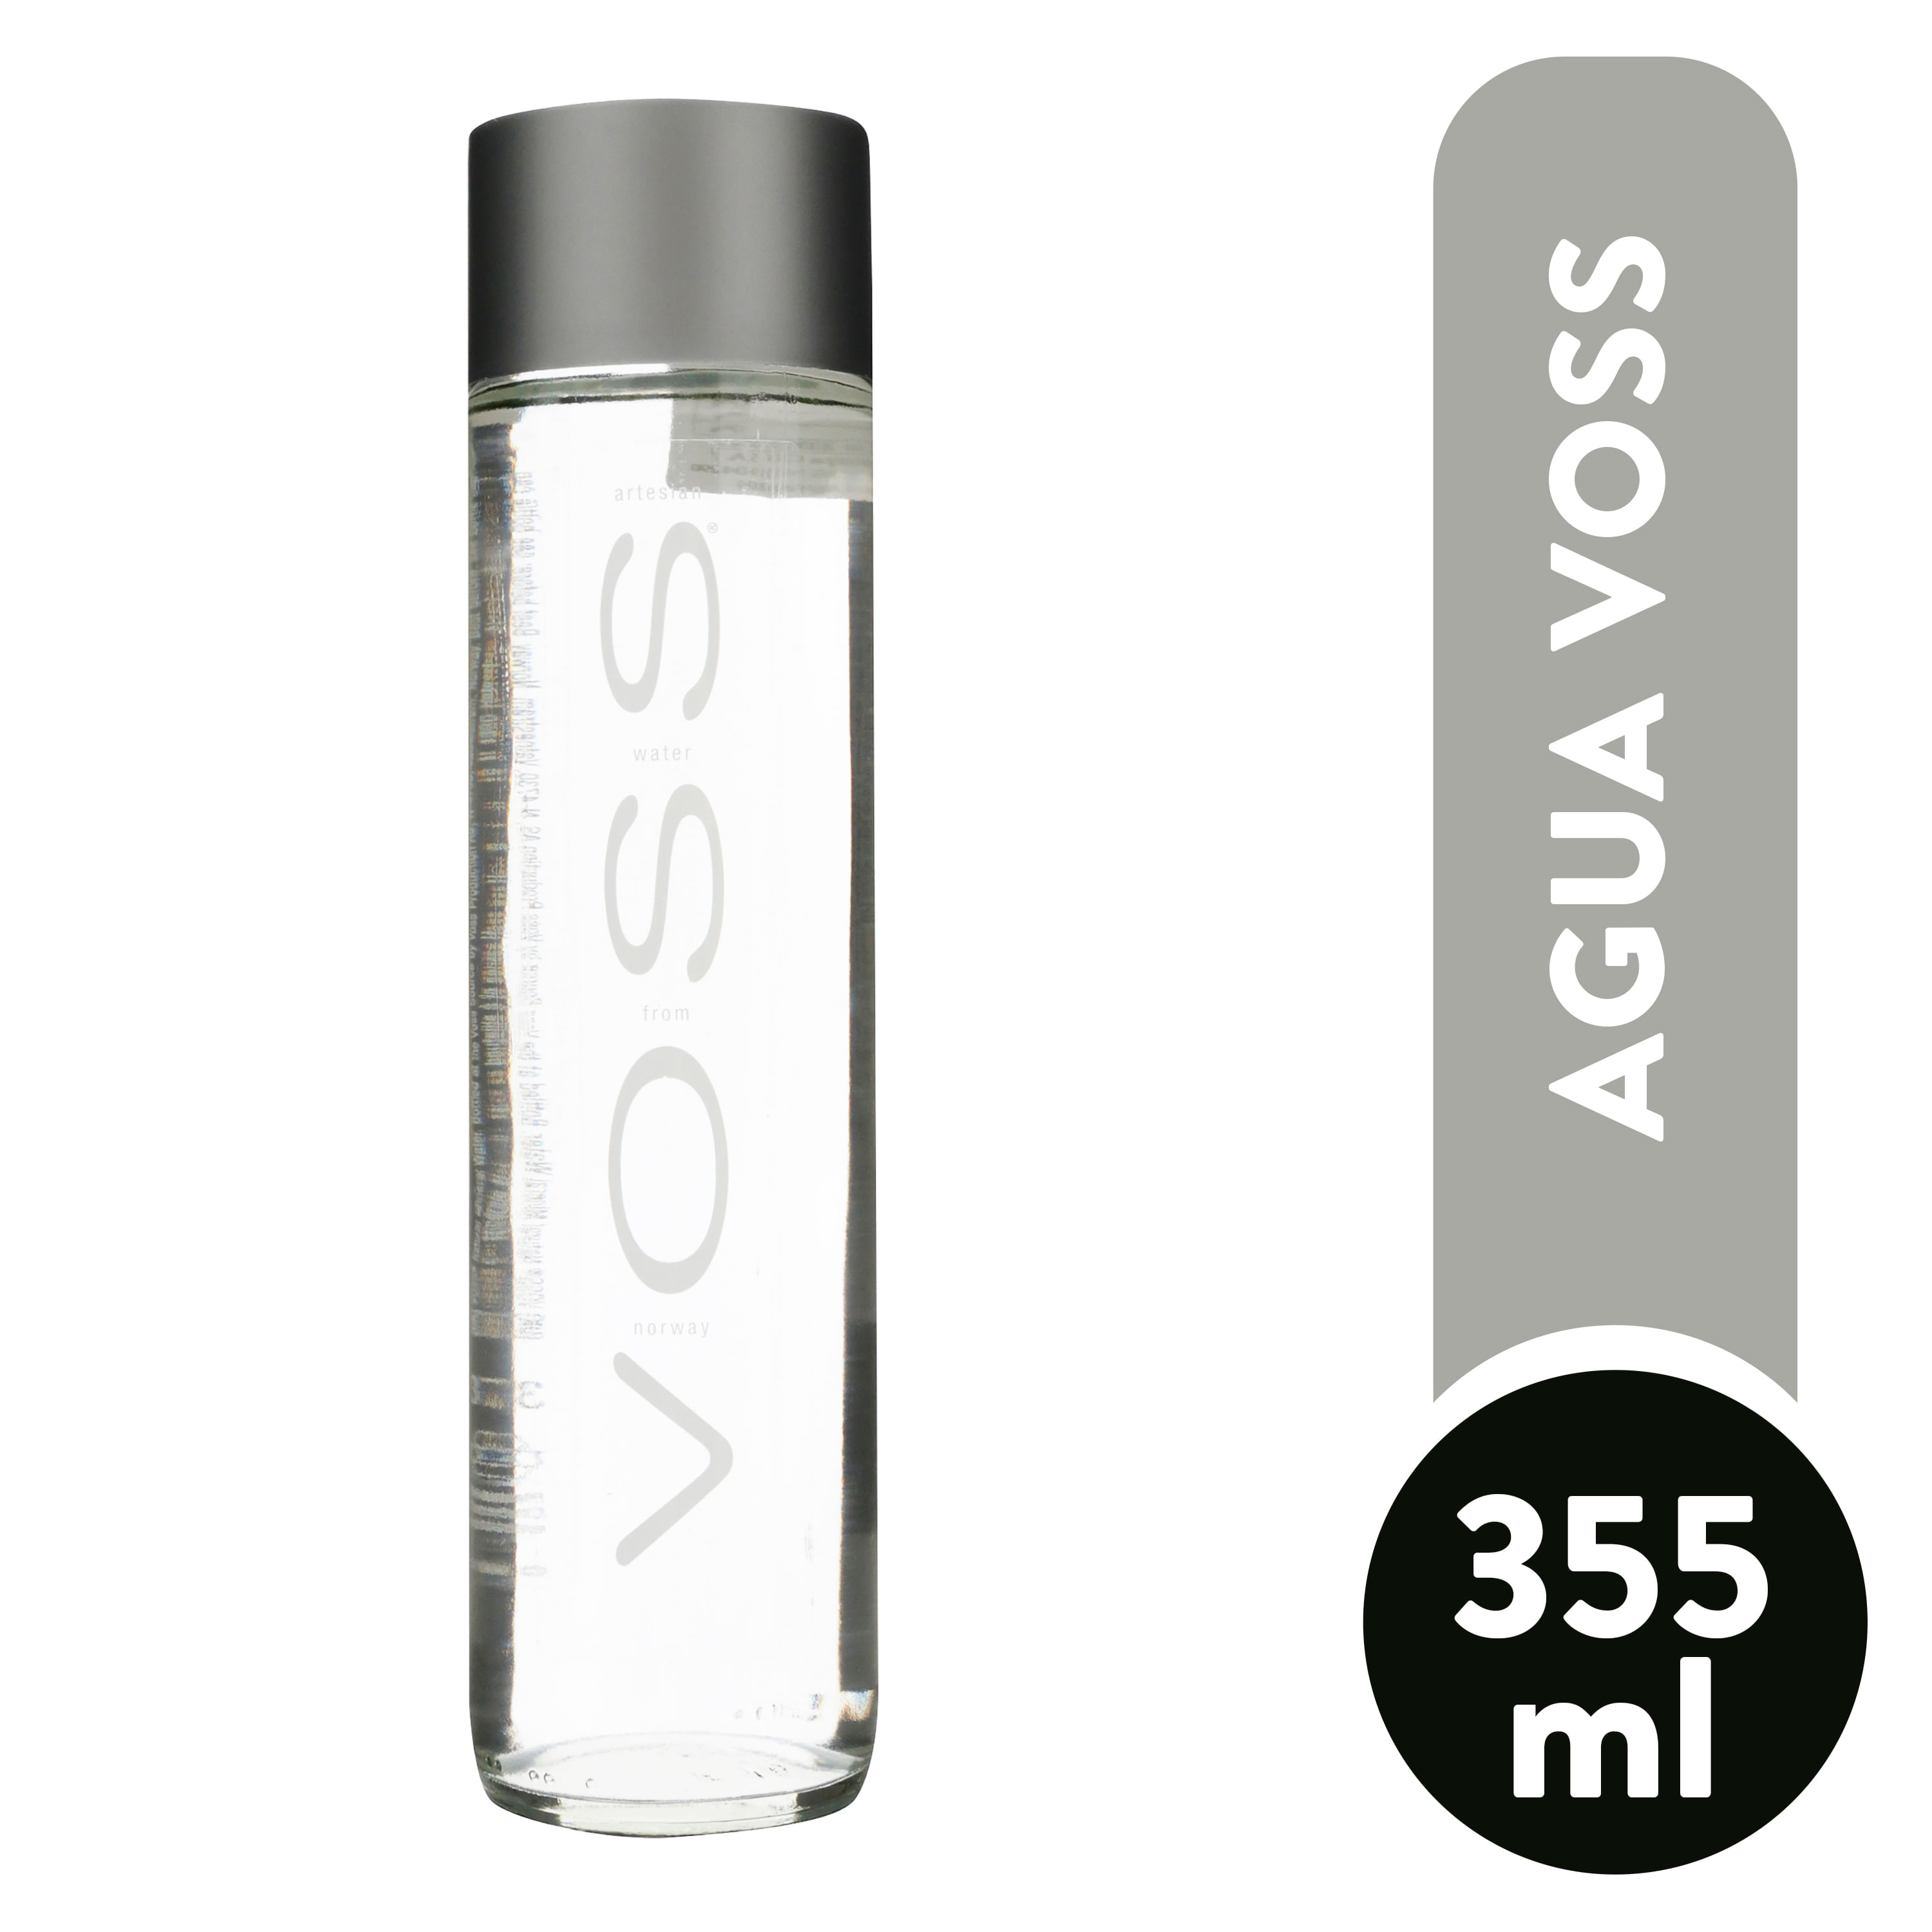 Comprar Agua Voss - 375ml, Walmart Costa Rica - Maxi Palí